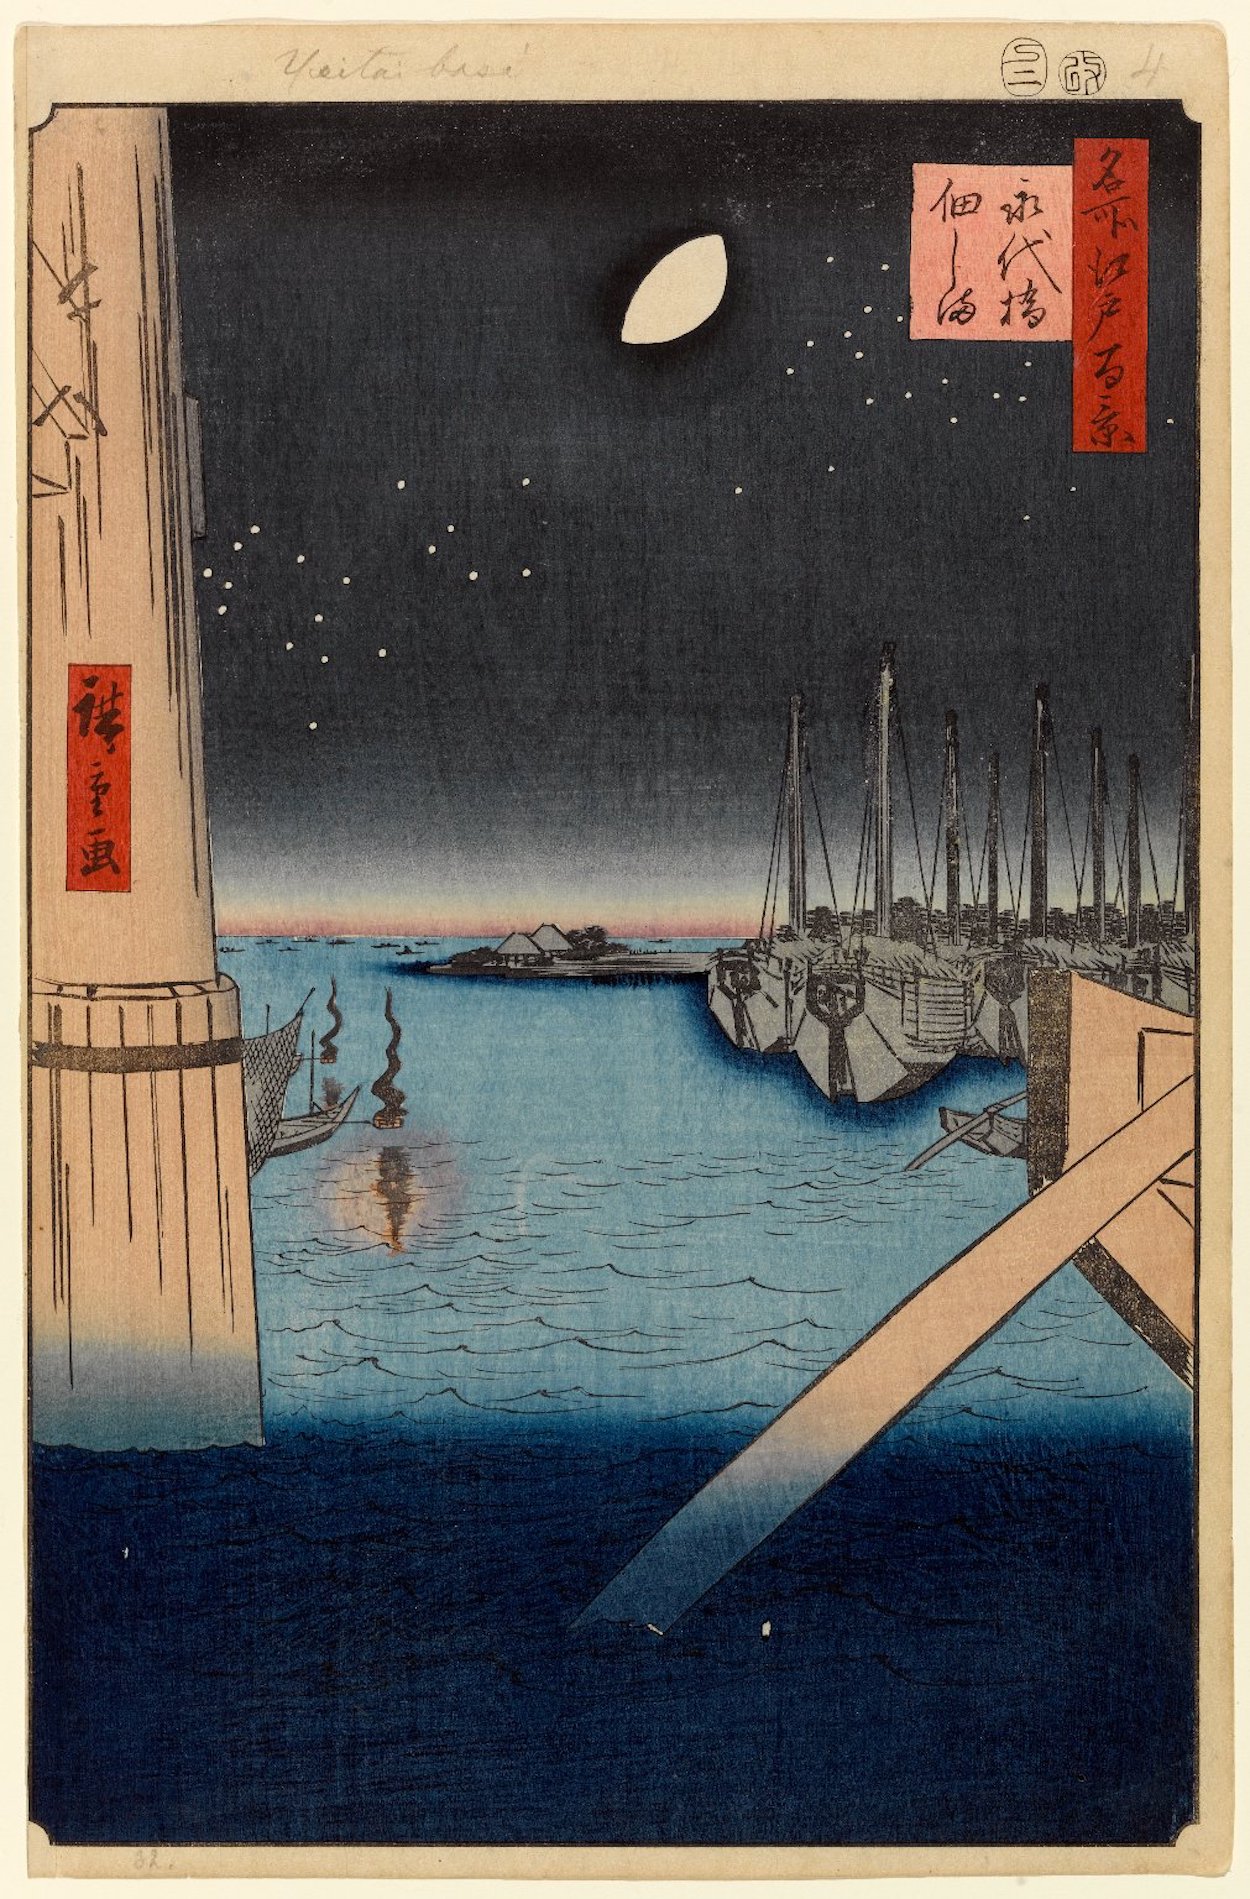 Tsukudajima de pe Podul Eitai, Nr. 4 by  Hiroshige - 1857 - 13 3/8 x 9 in 